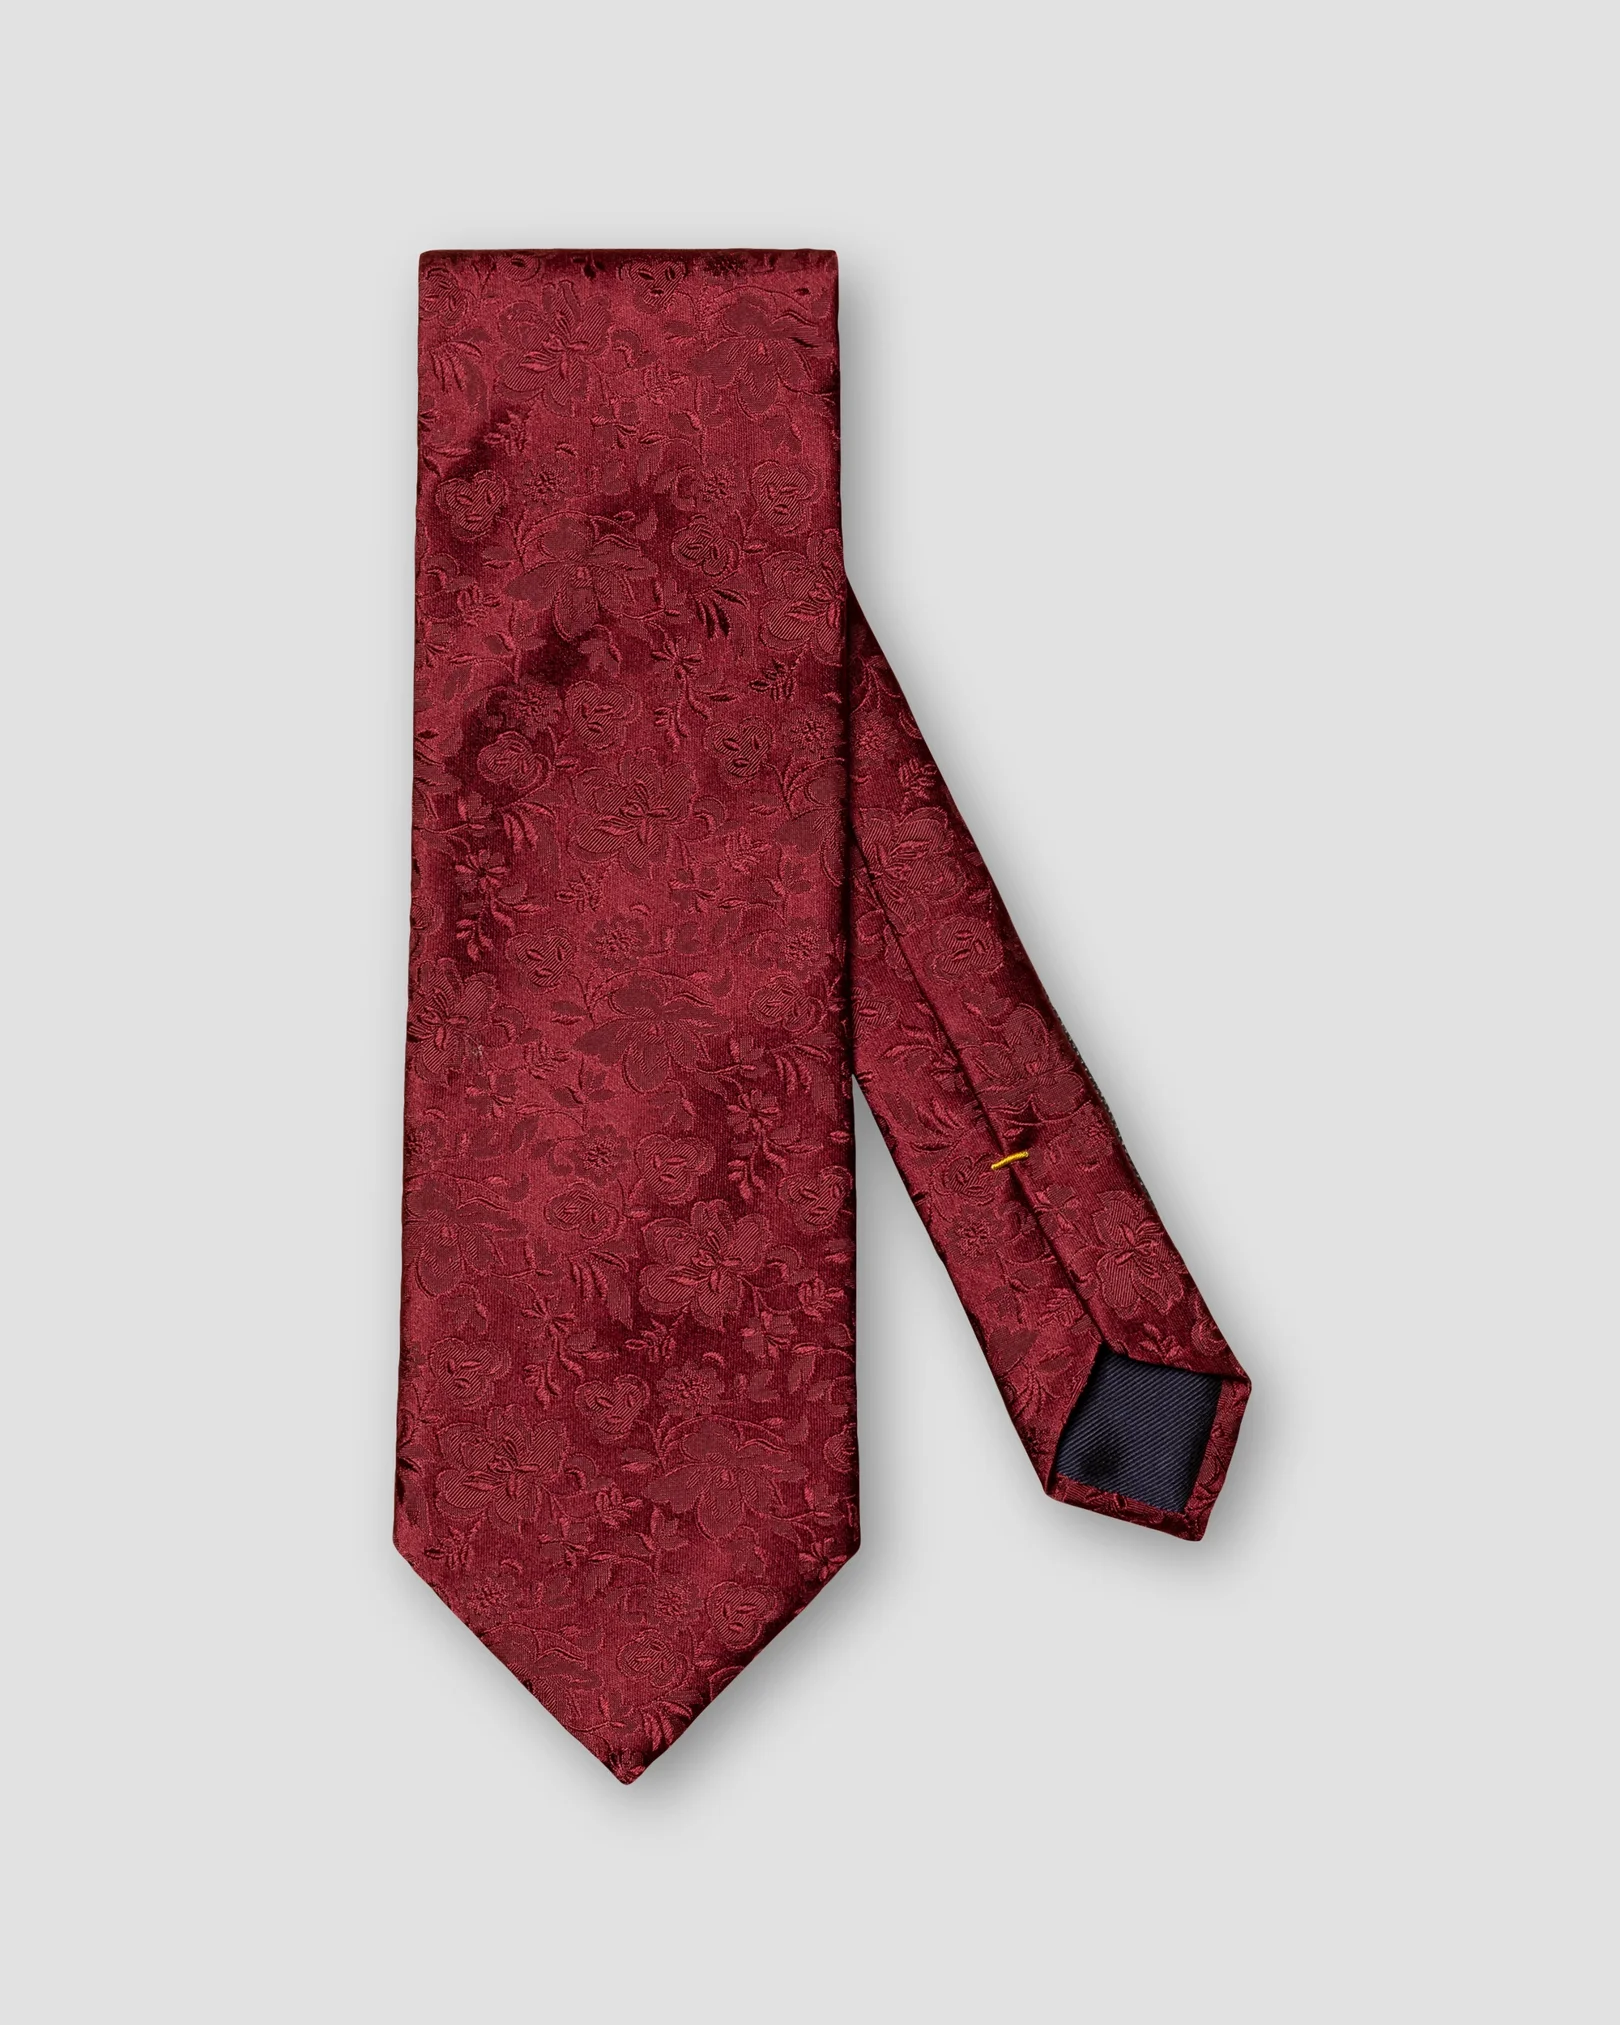 Burgundy Red Floral Tie - Grateful Gadgets